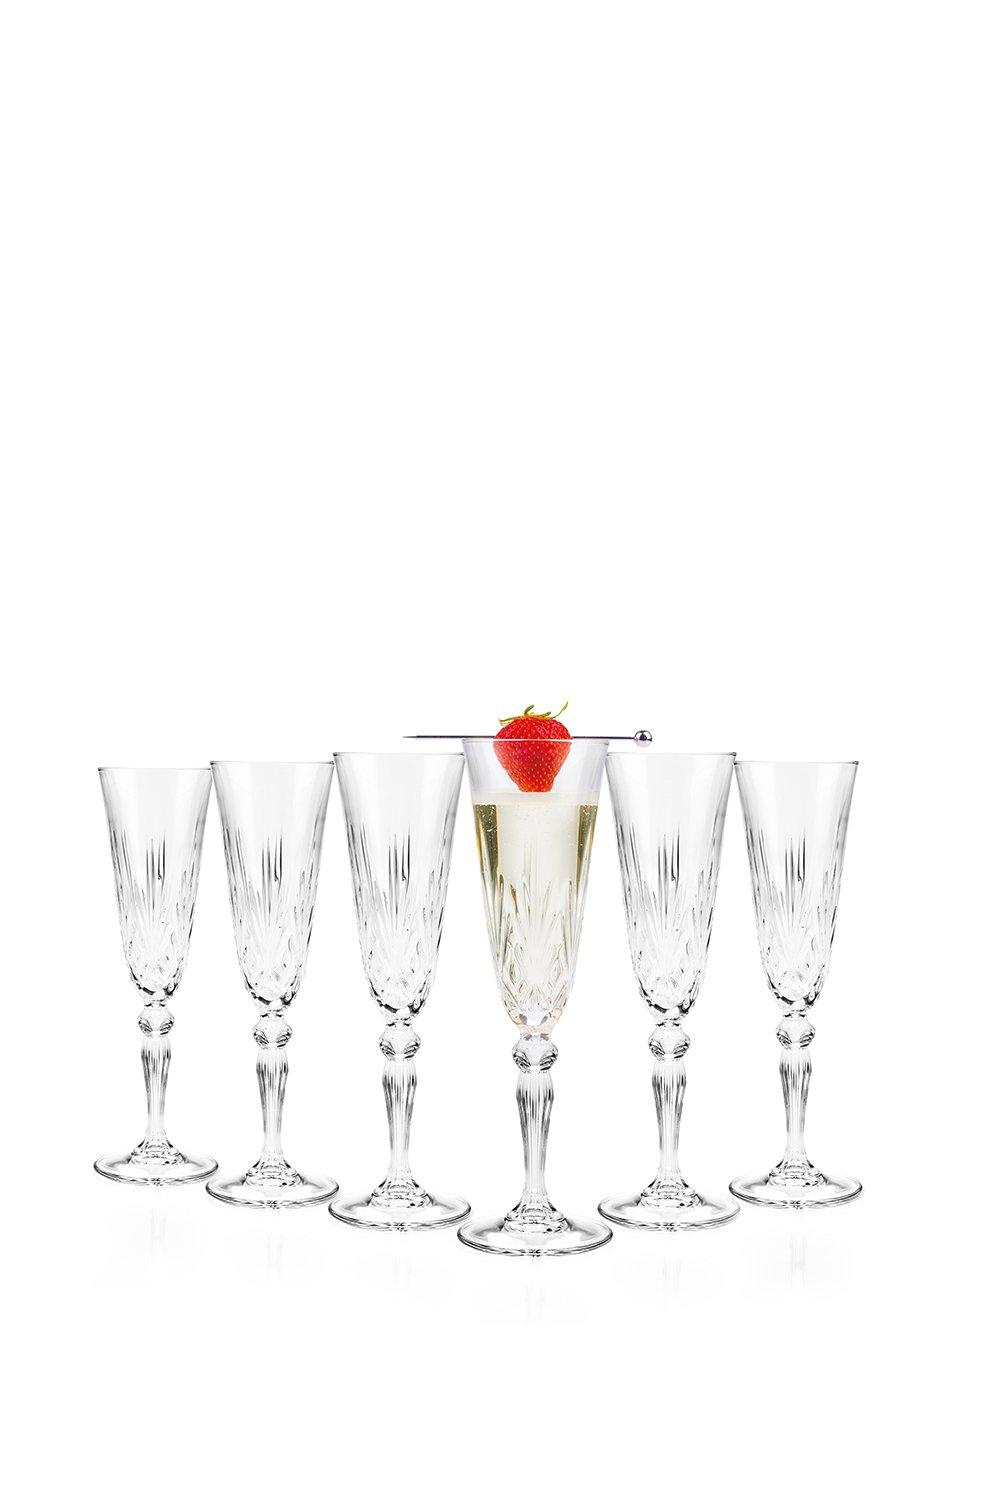 RCR Melodia Crystal Champagne Flutes, Set of 6